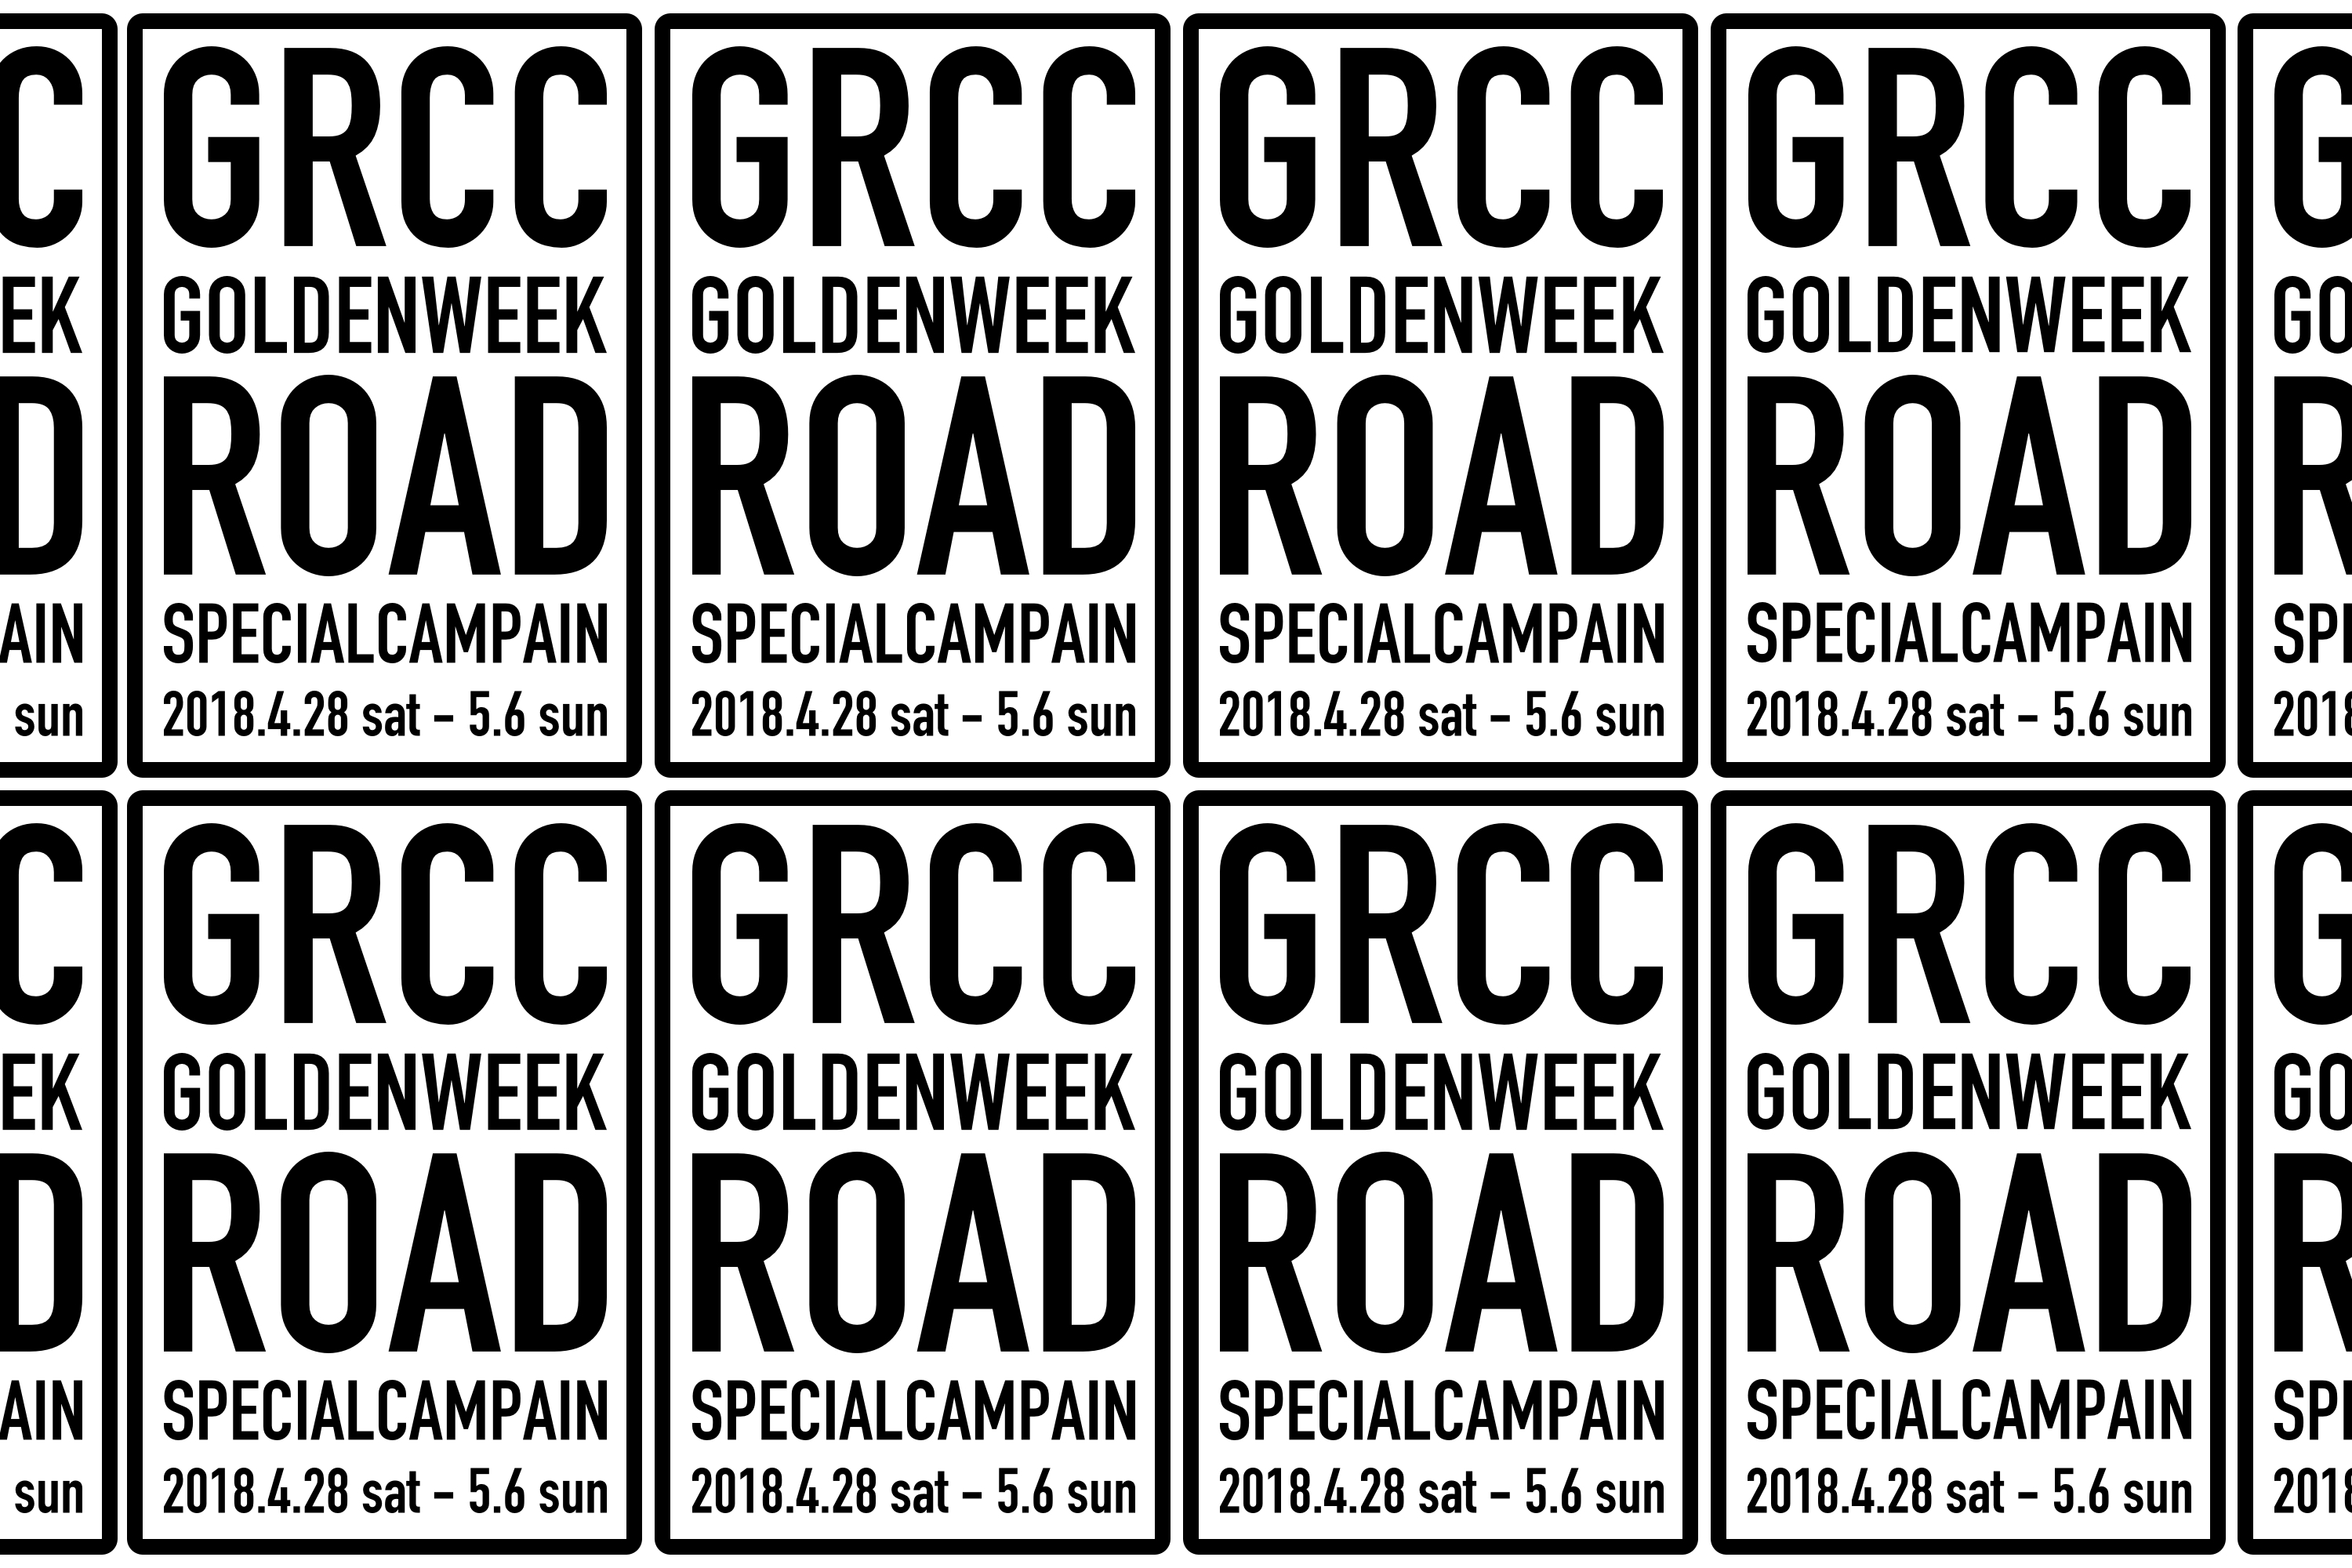 GRCC x ROAD